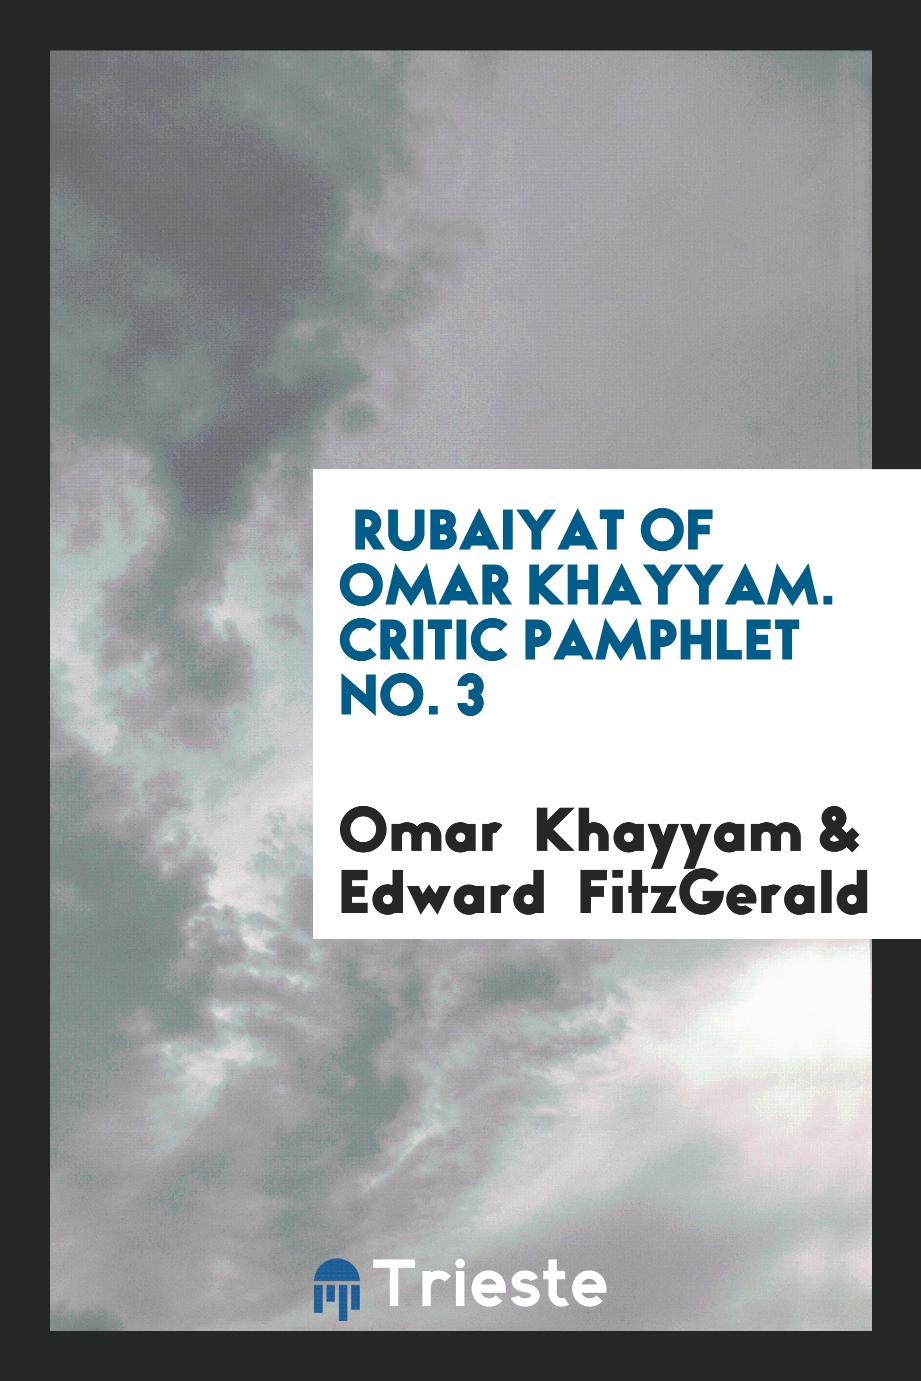 Rubaiyat of Omar Khayyam. Critic pamphlet No. 3